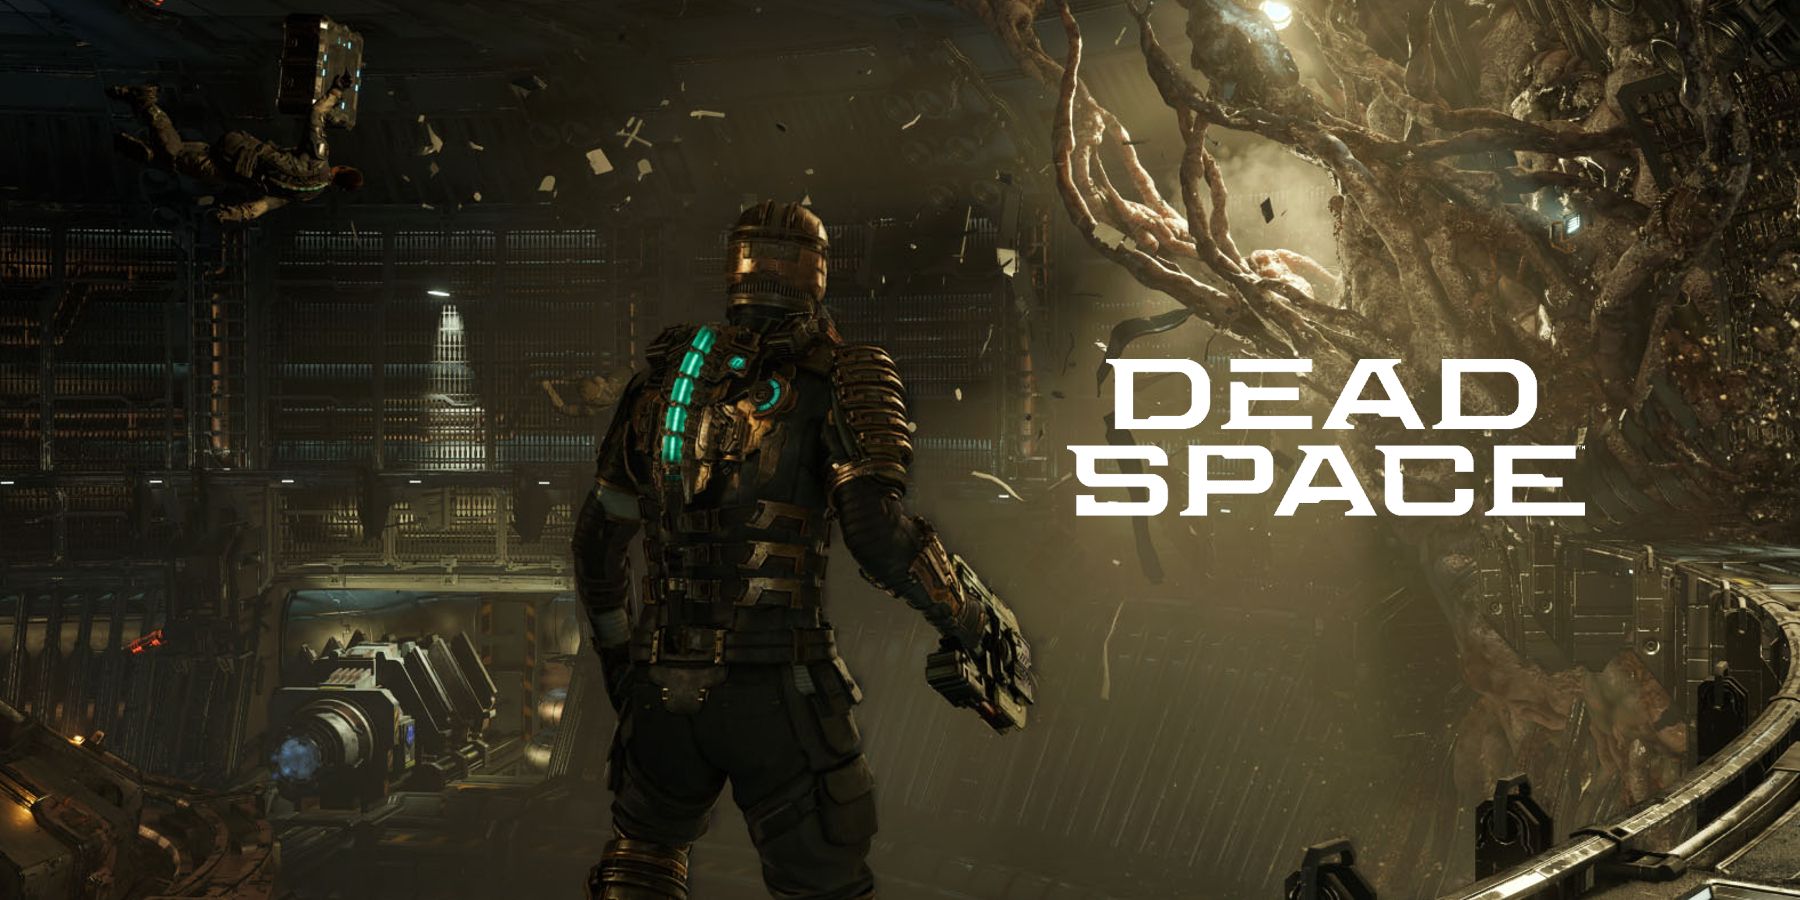 Should 'Dead Space' stay dead?